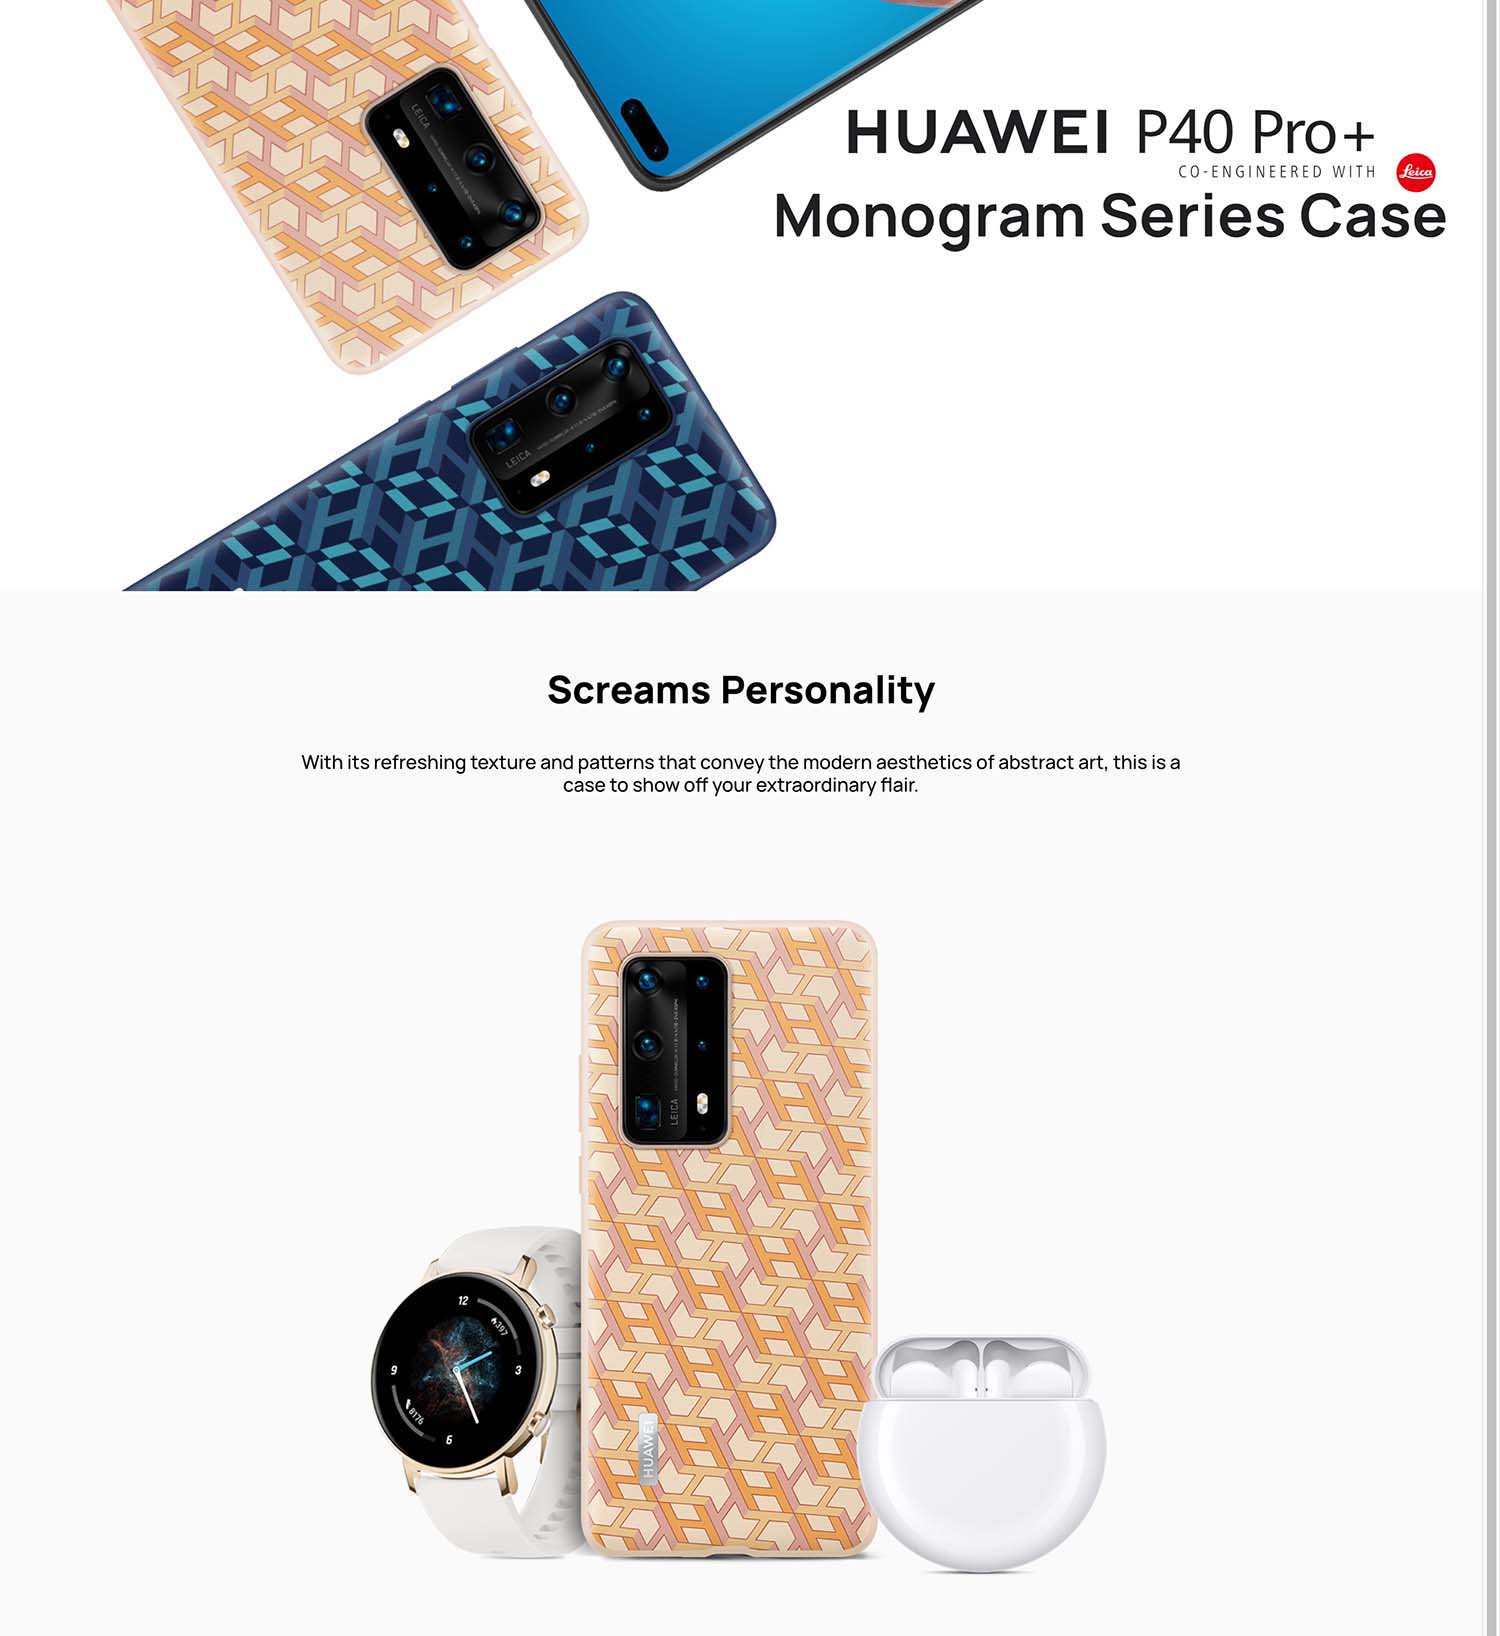 HUAWEI P40 Pro+ case